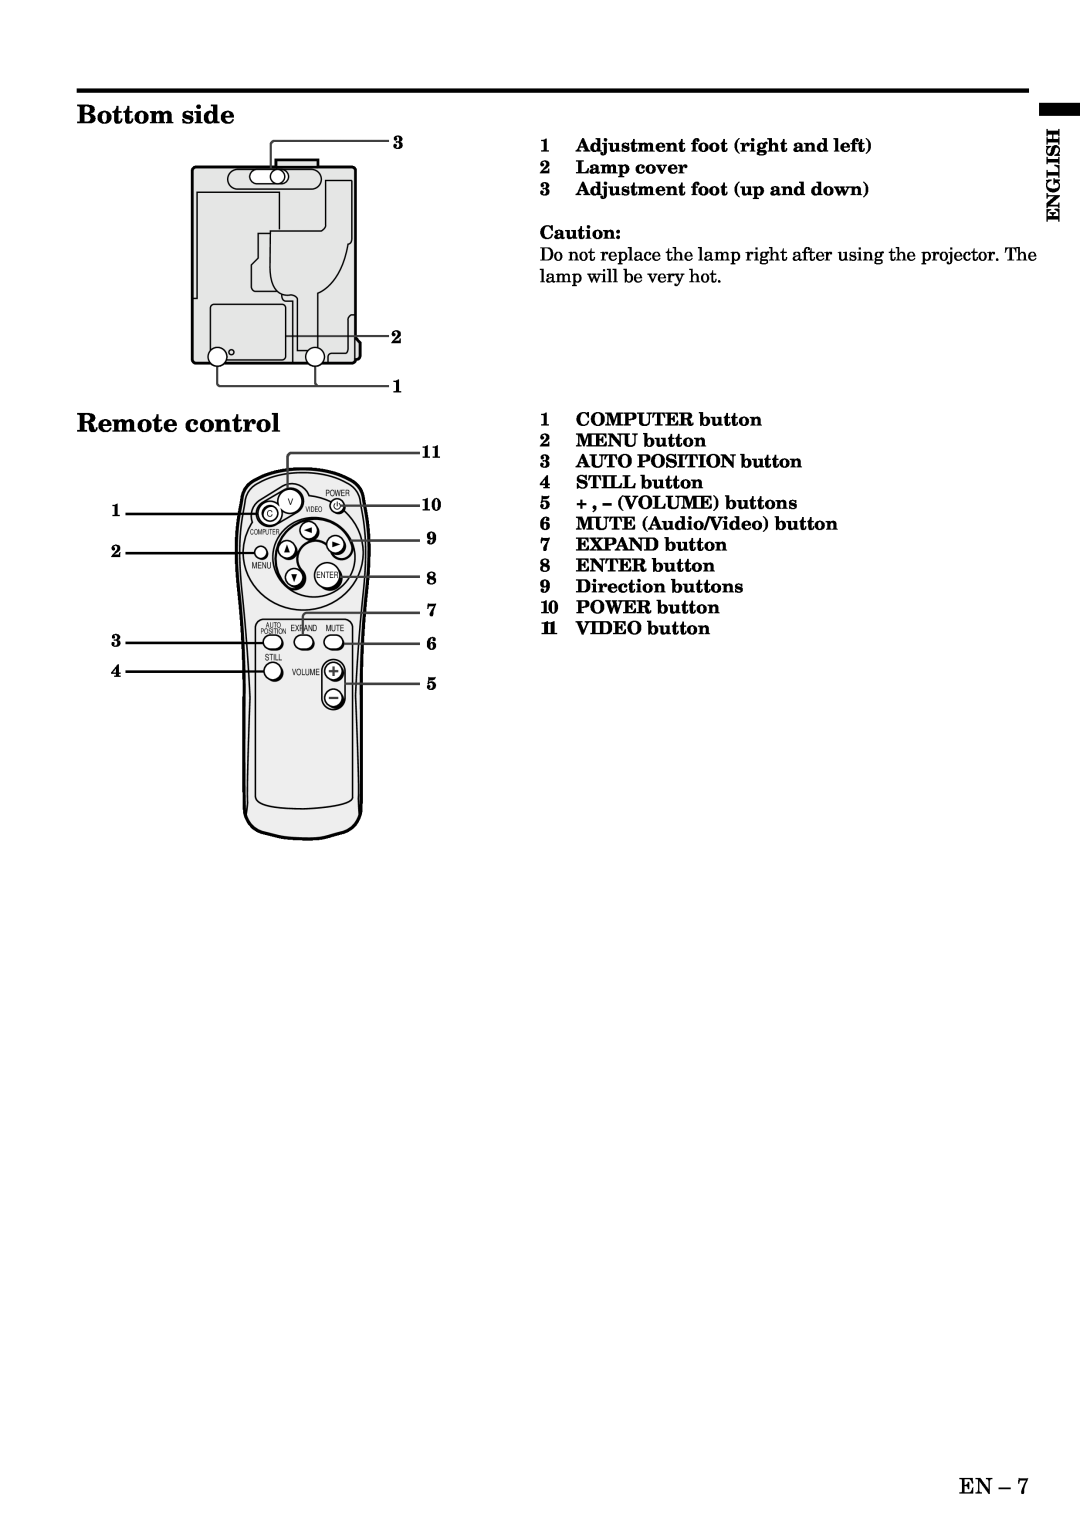 Mitsubishi Electronics LVP-SA51U user manual Bottom side, Remote control, Video, Auto, Volume 